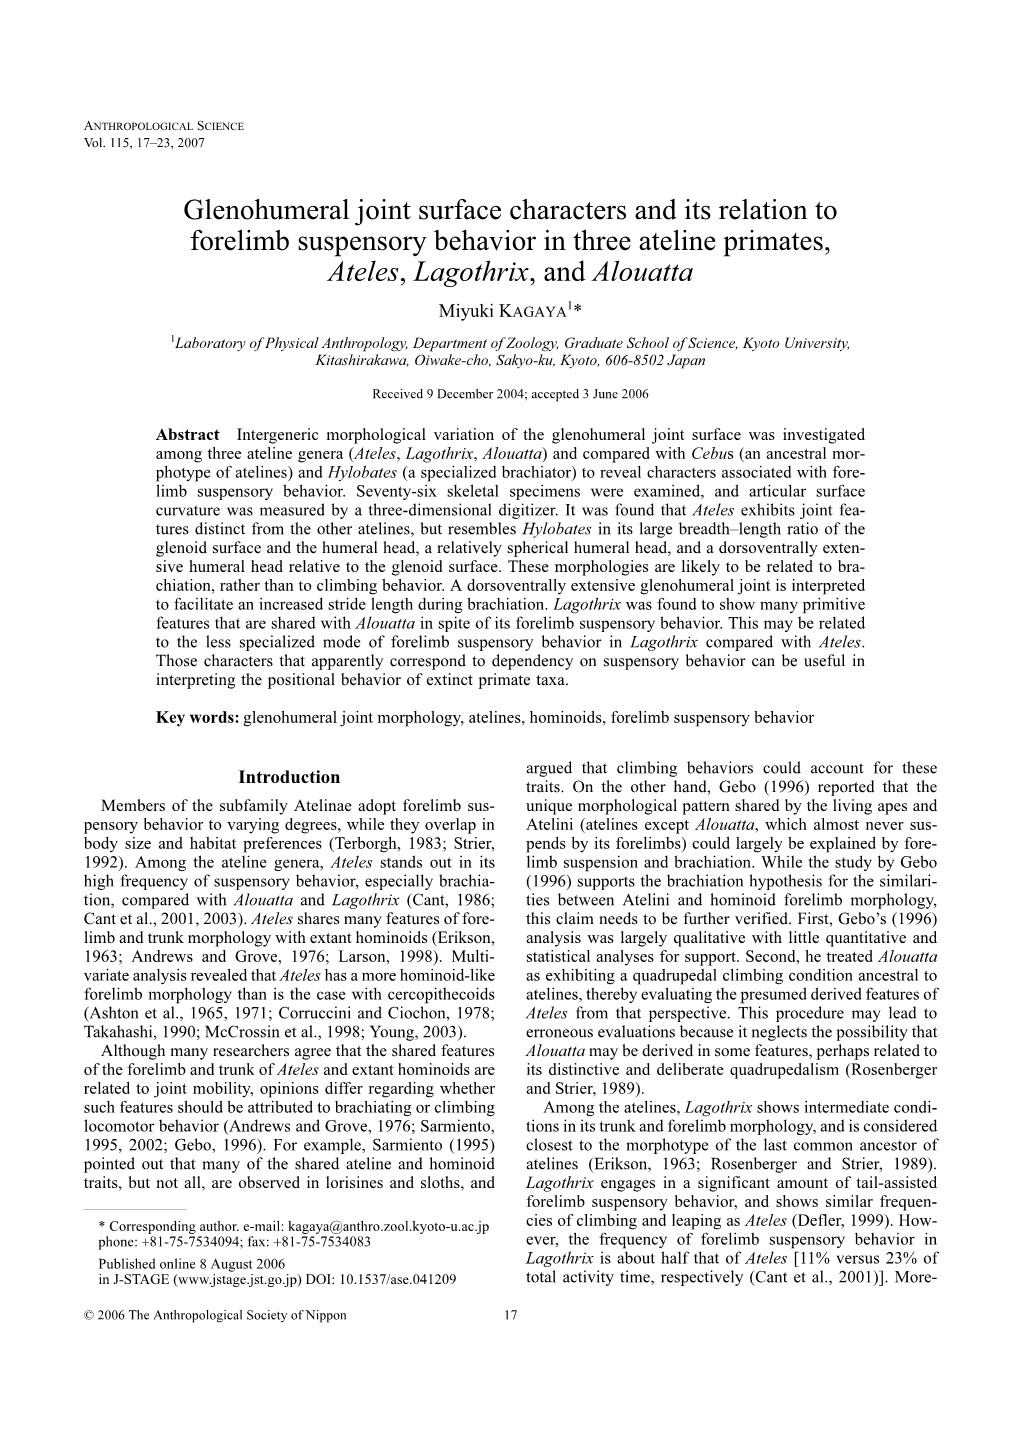 Glenohumeral Joint Surface Characters and Its Relation to Forelimb Suspensory Behavior in Three Ateline Primates, Ateles, Lagothrix, and Alouatta Miyuki KAGAYA1*